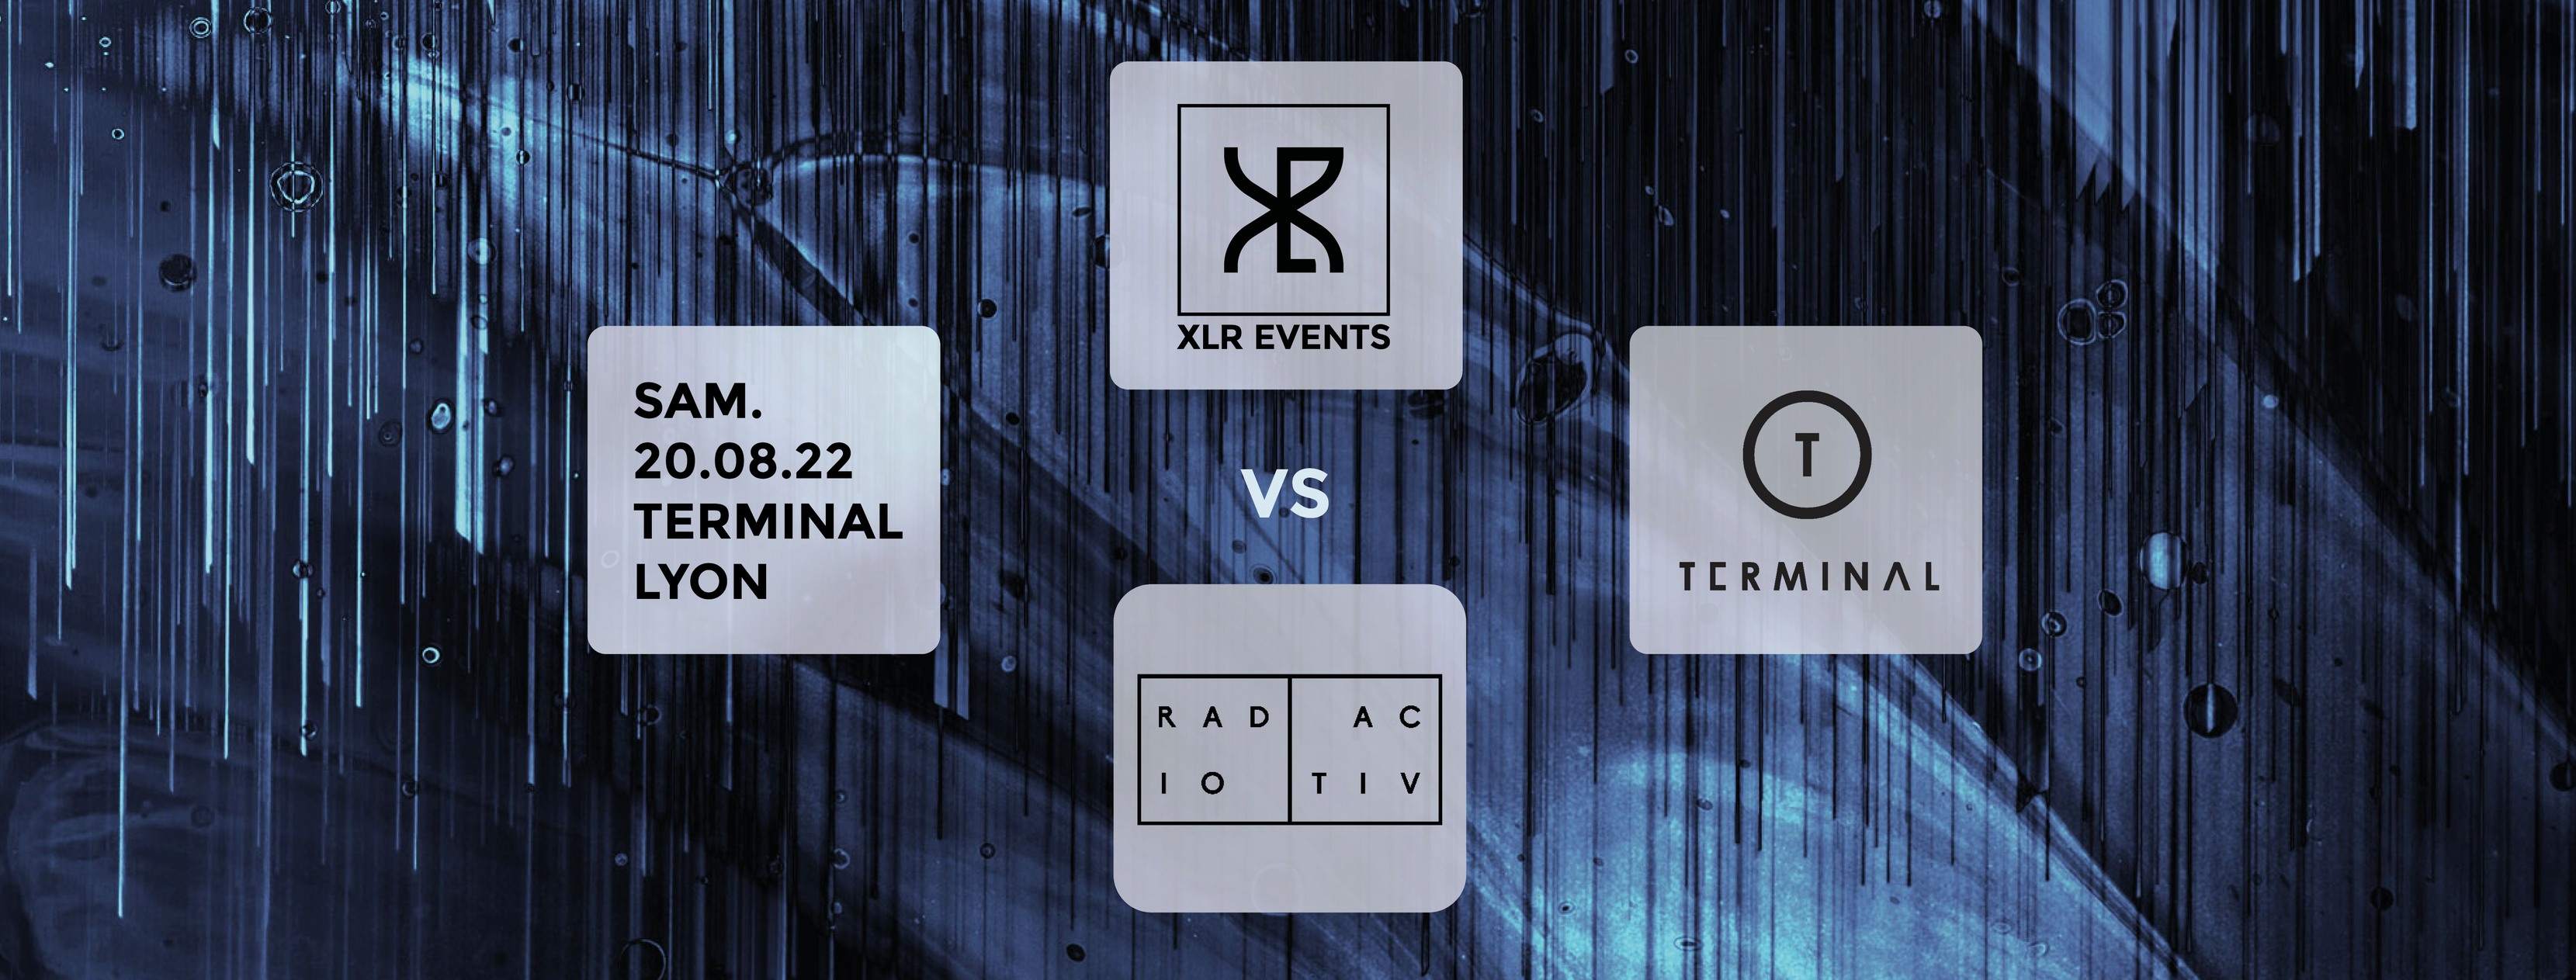 XLR Events VS Radioactiv - フライヤー表